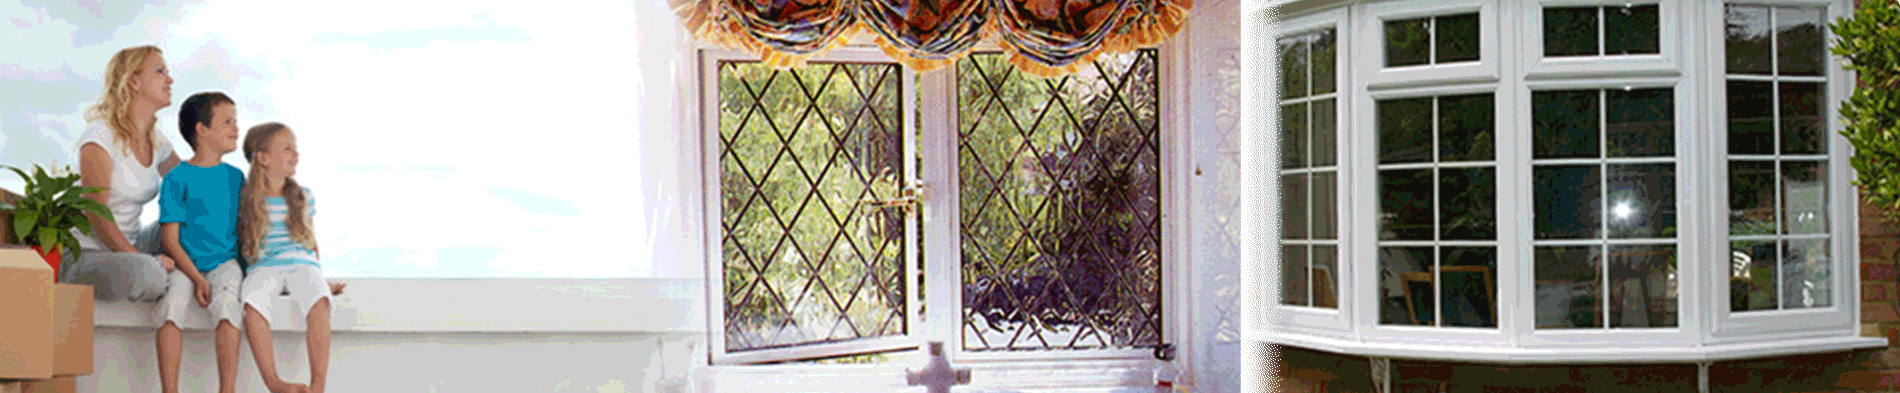 UPVC Casement Windows in High Wycombe